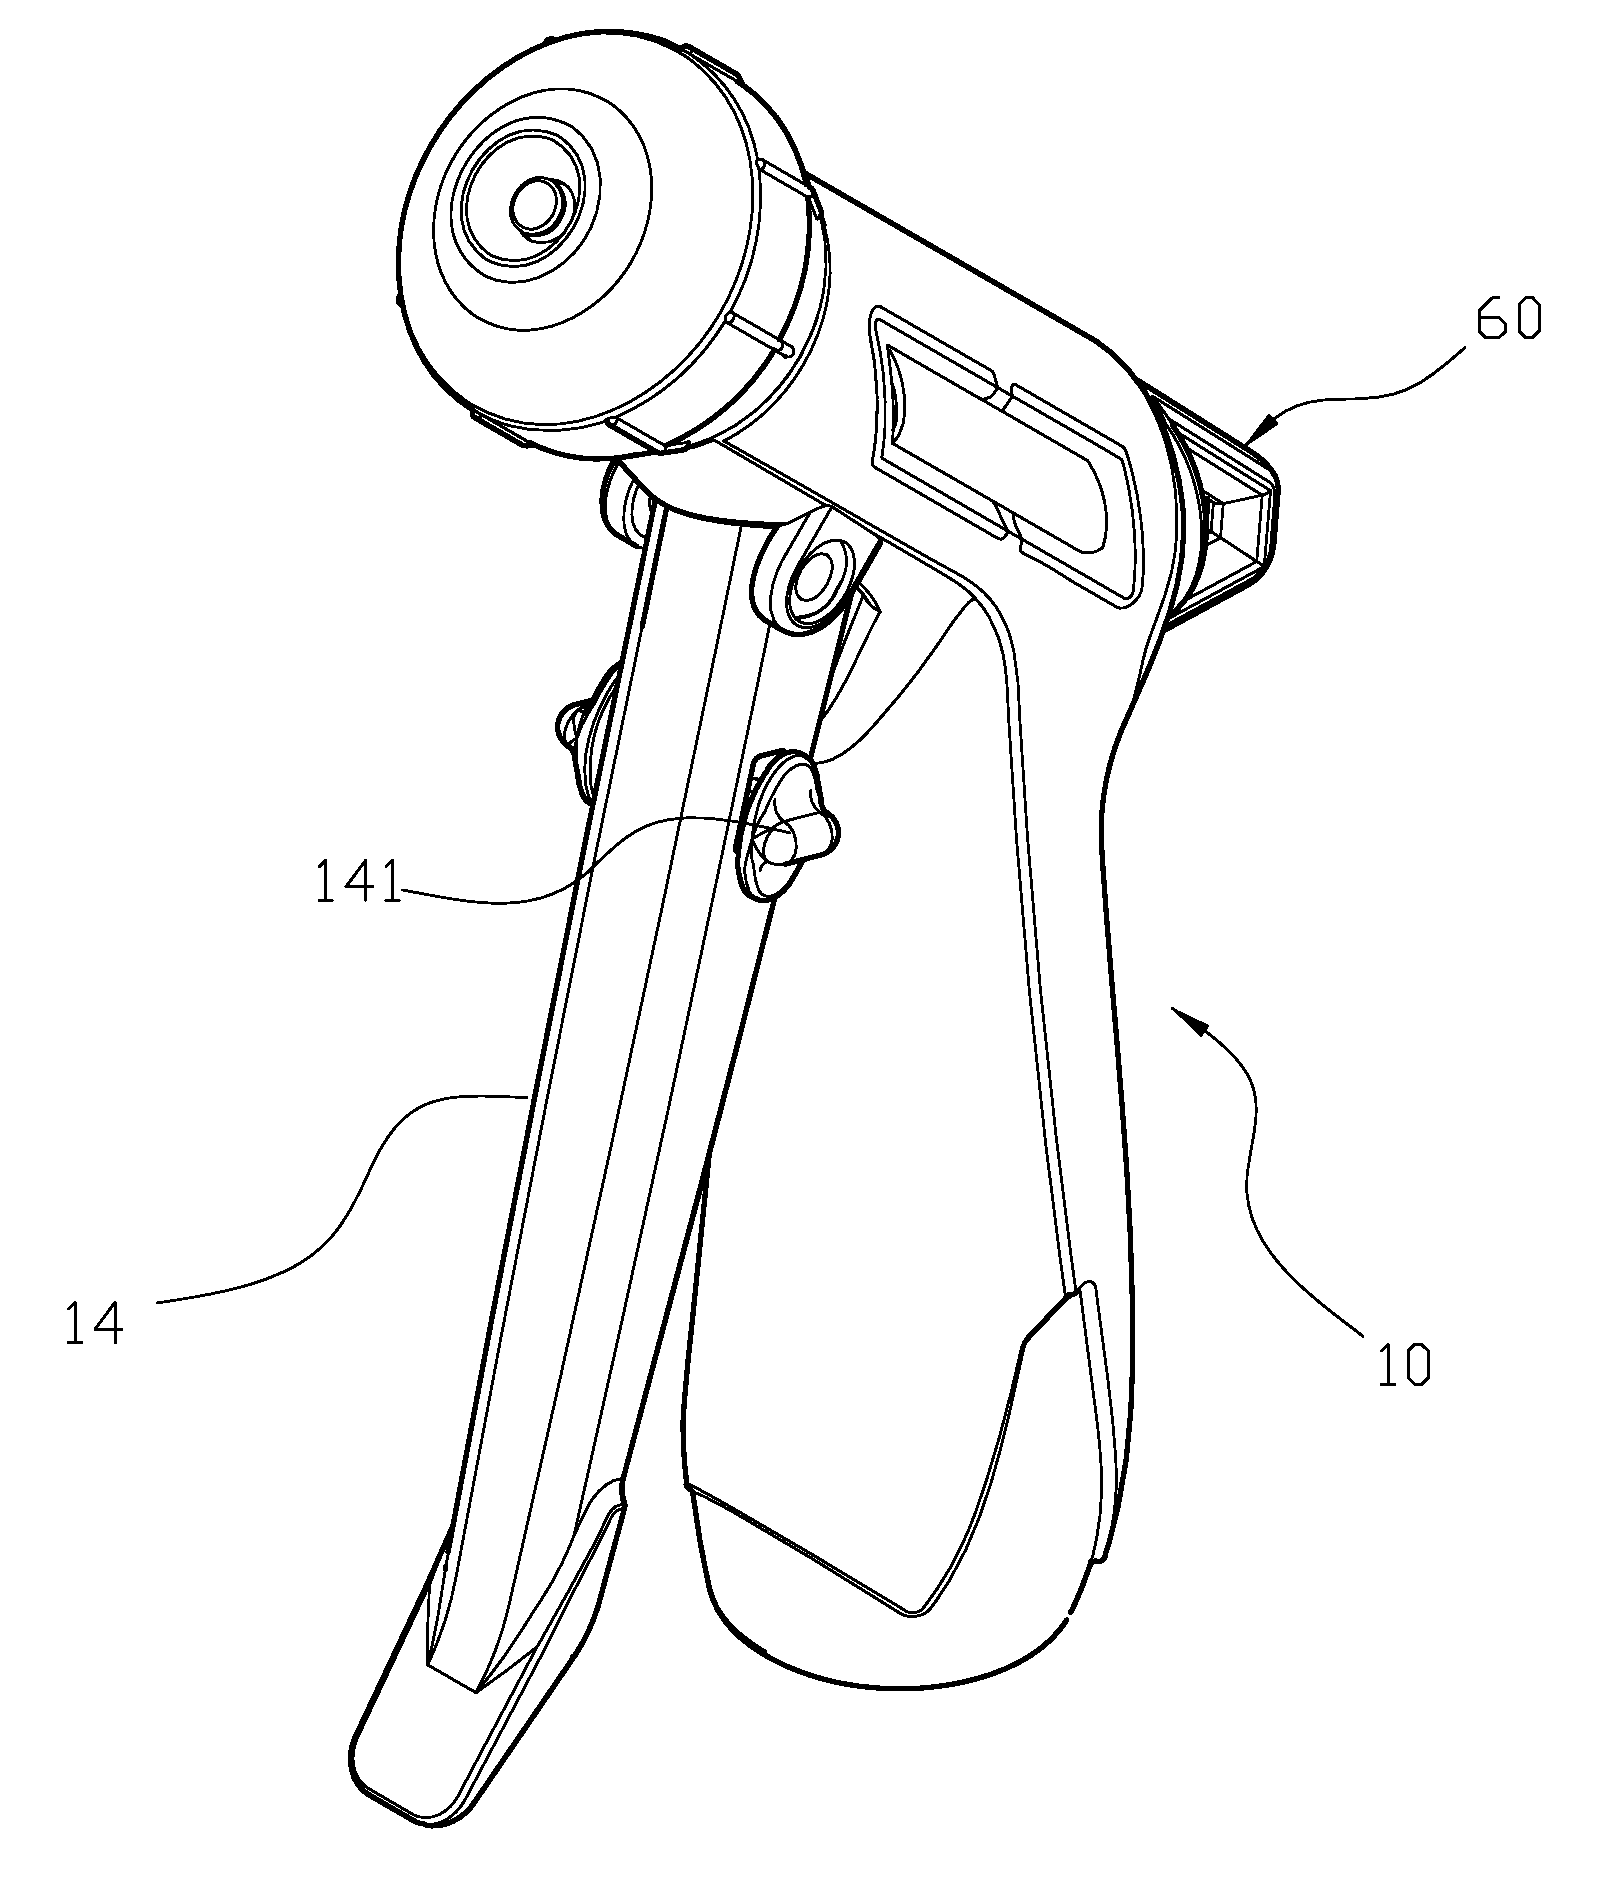 Gardening spray gun